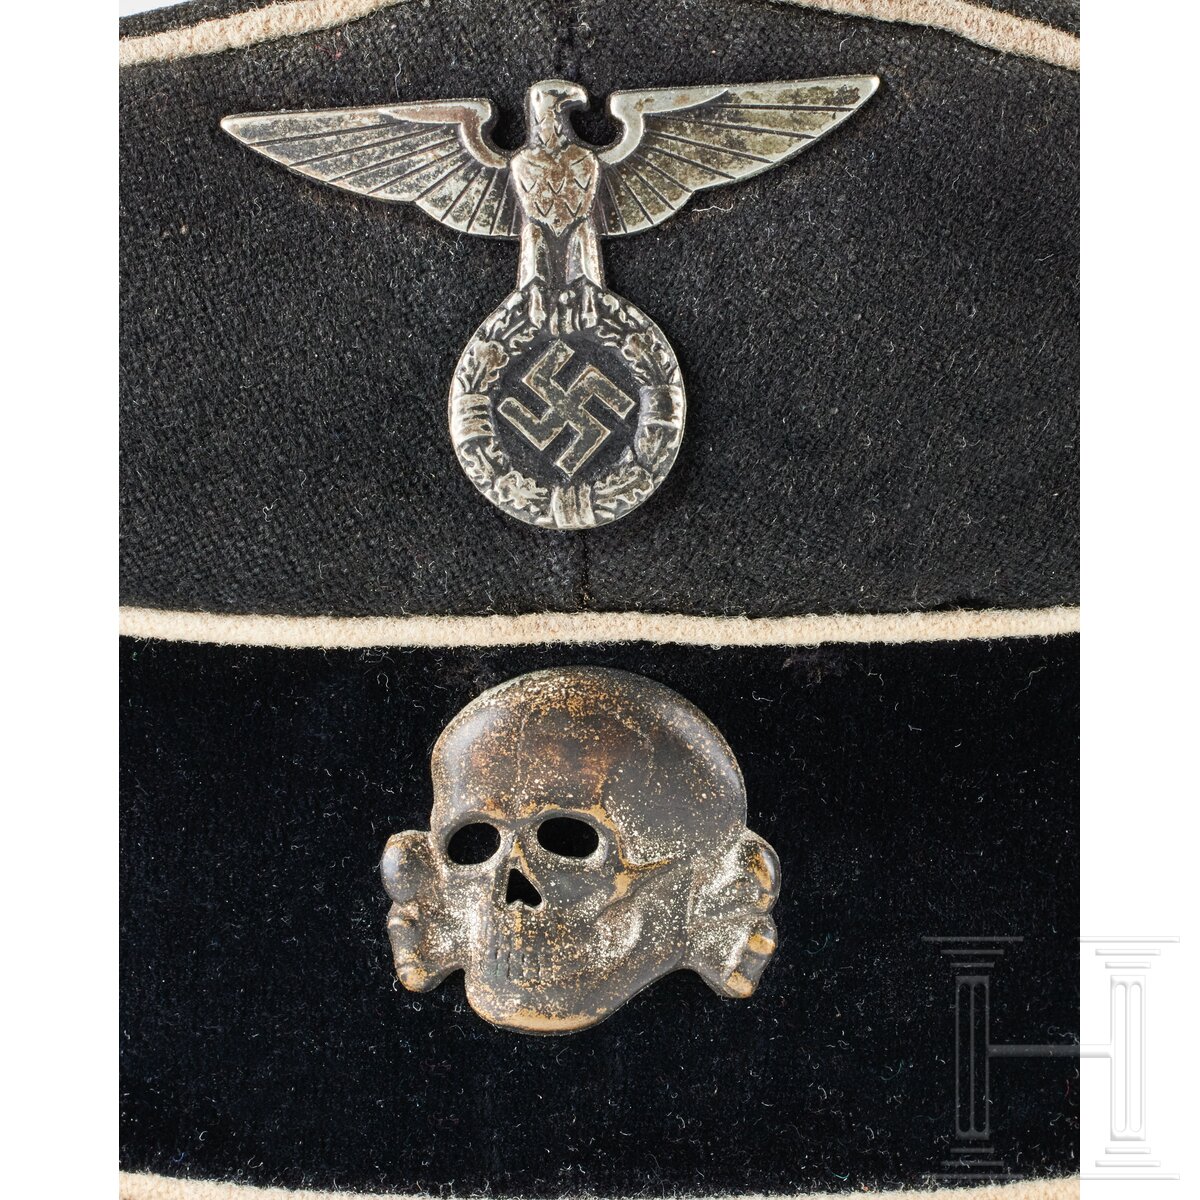 A Visor Cap for Allgemeine SS Officer - Image 3 of 8